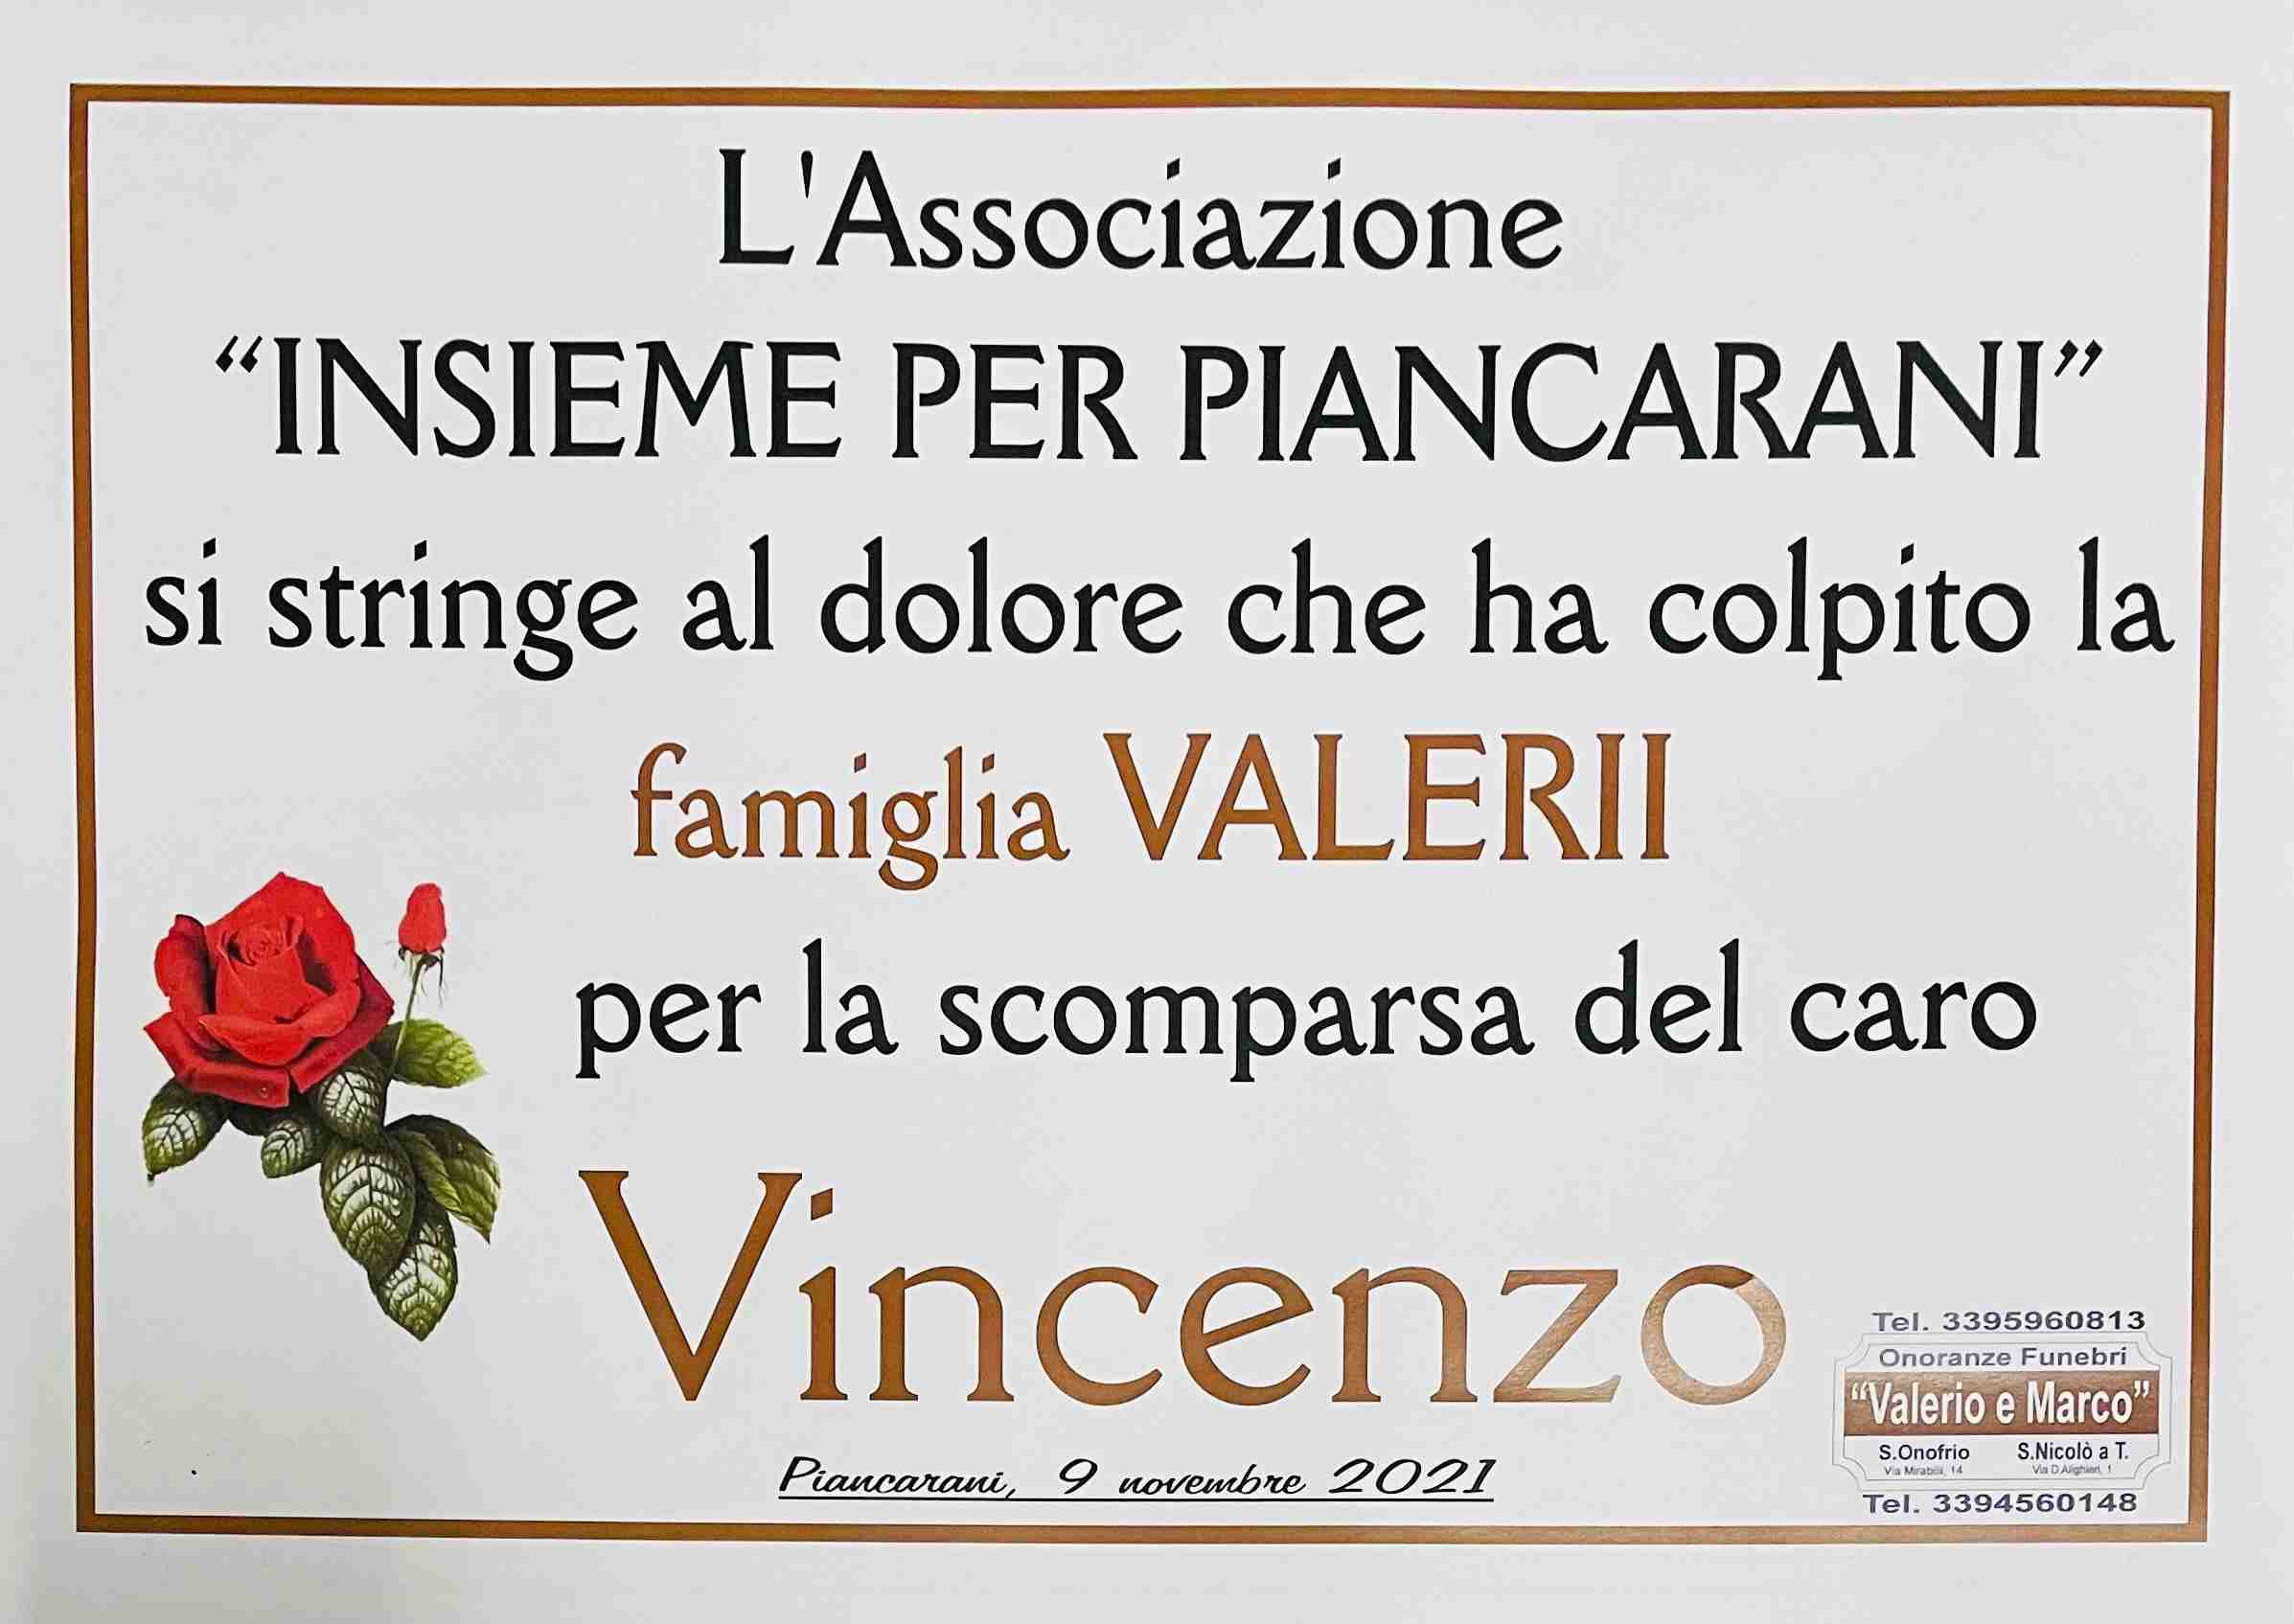 Vincenzo Valerii